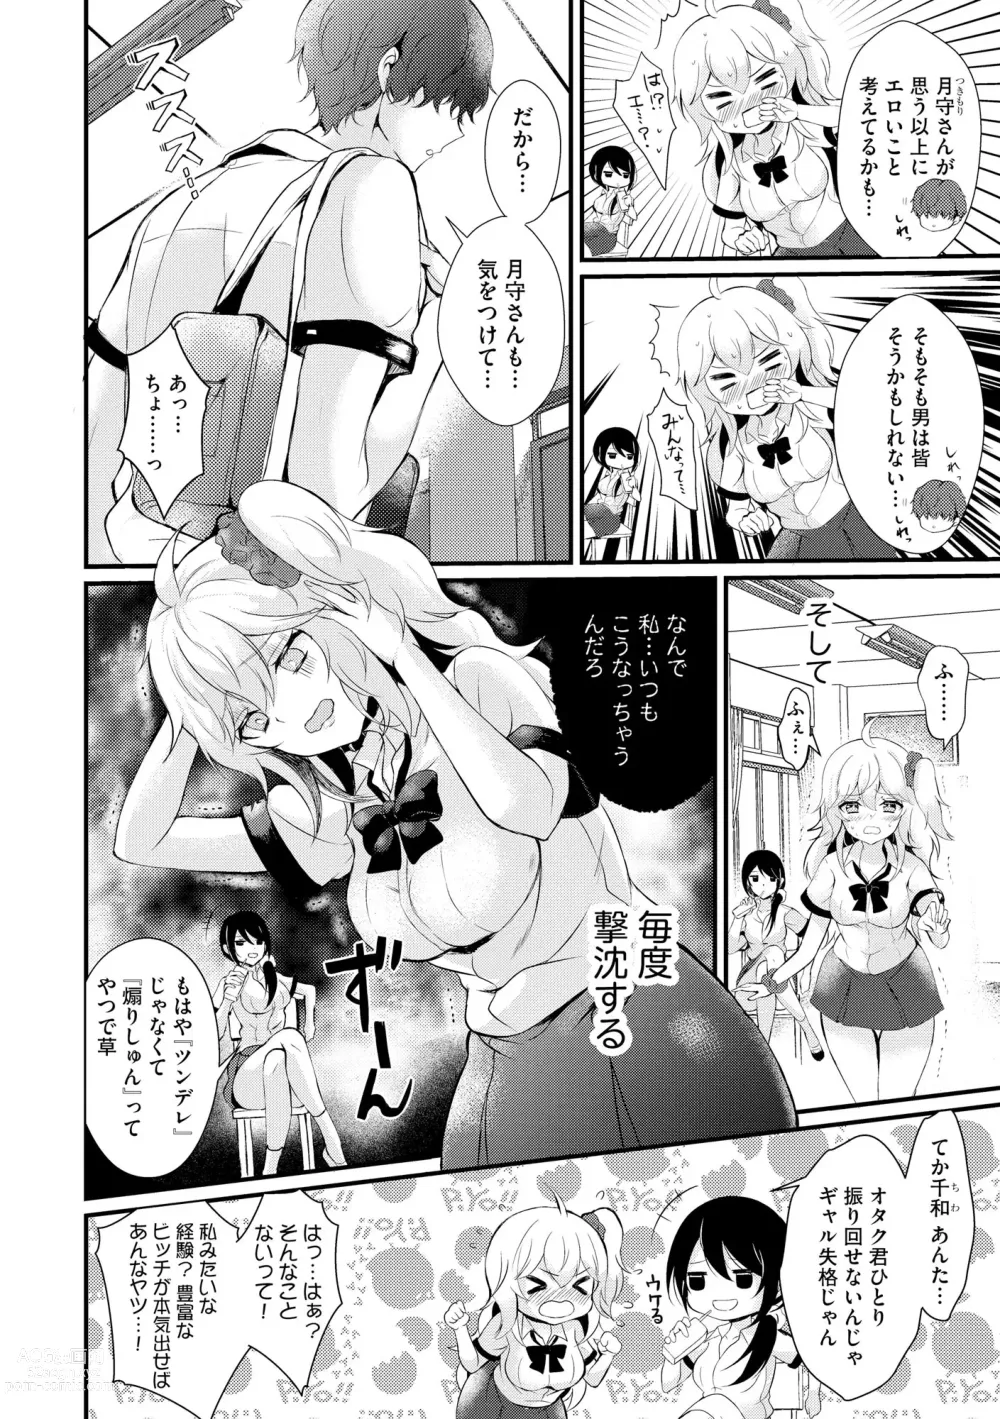 Page 6 of manga Choro Cos!